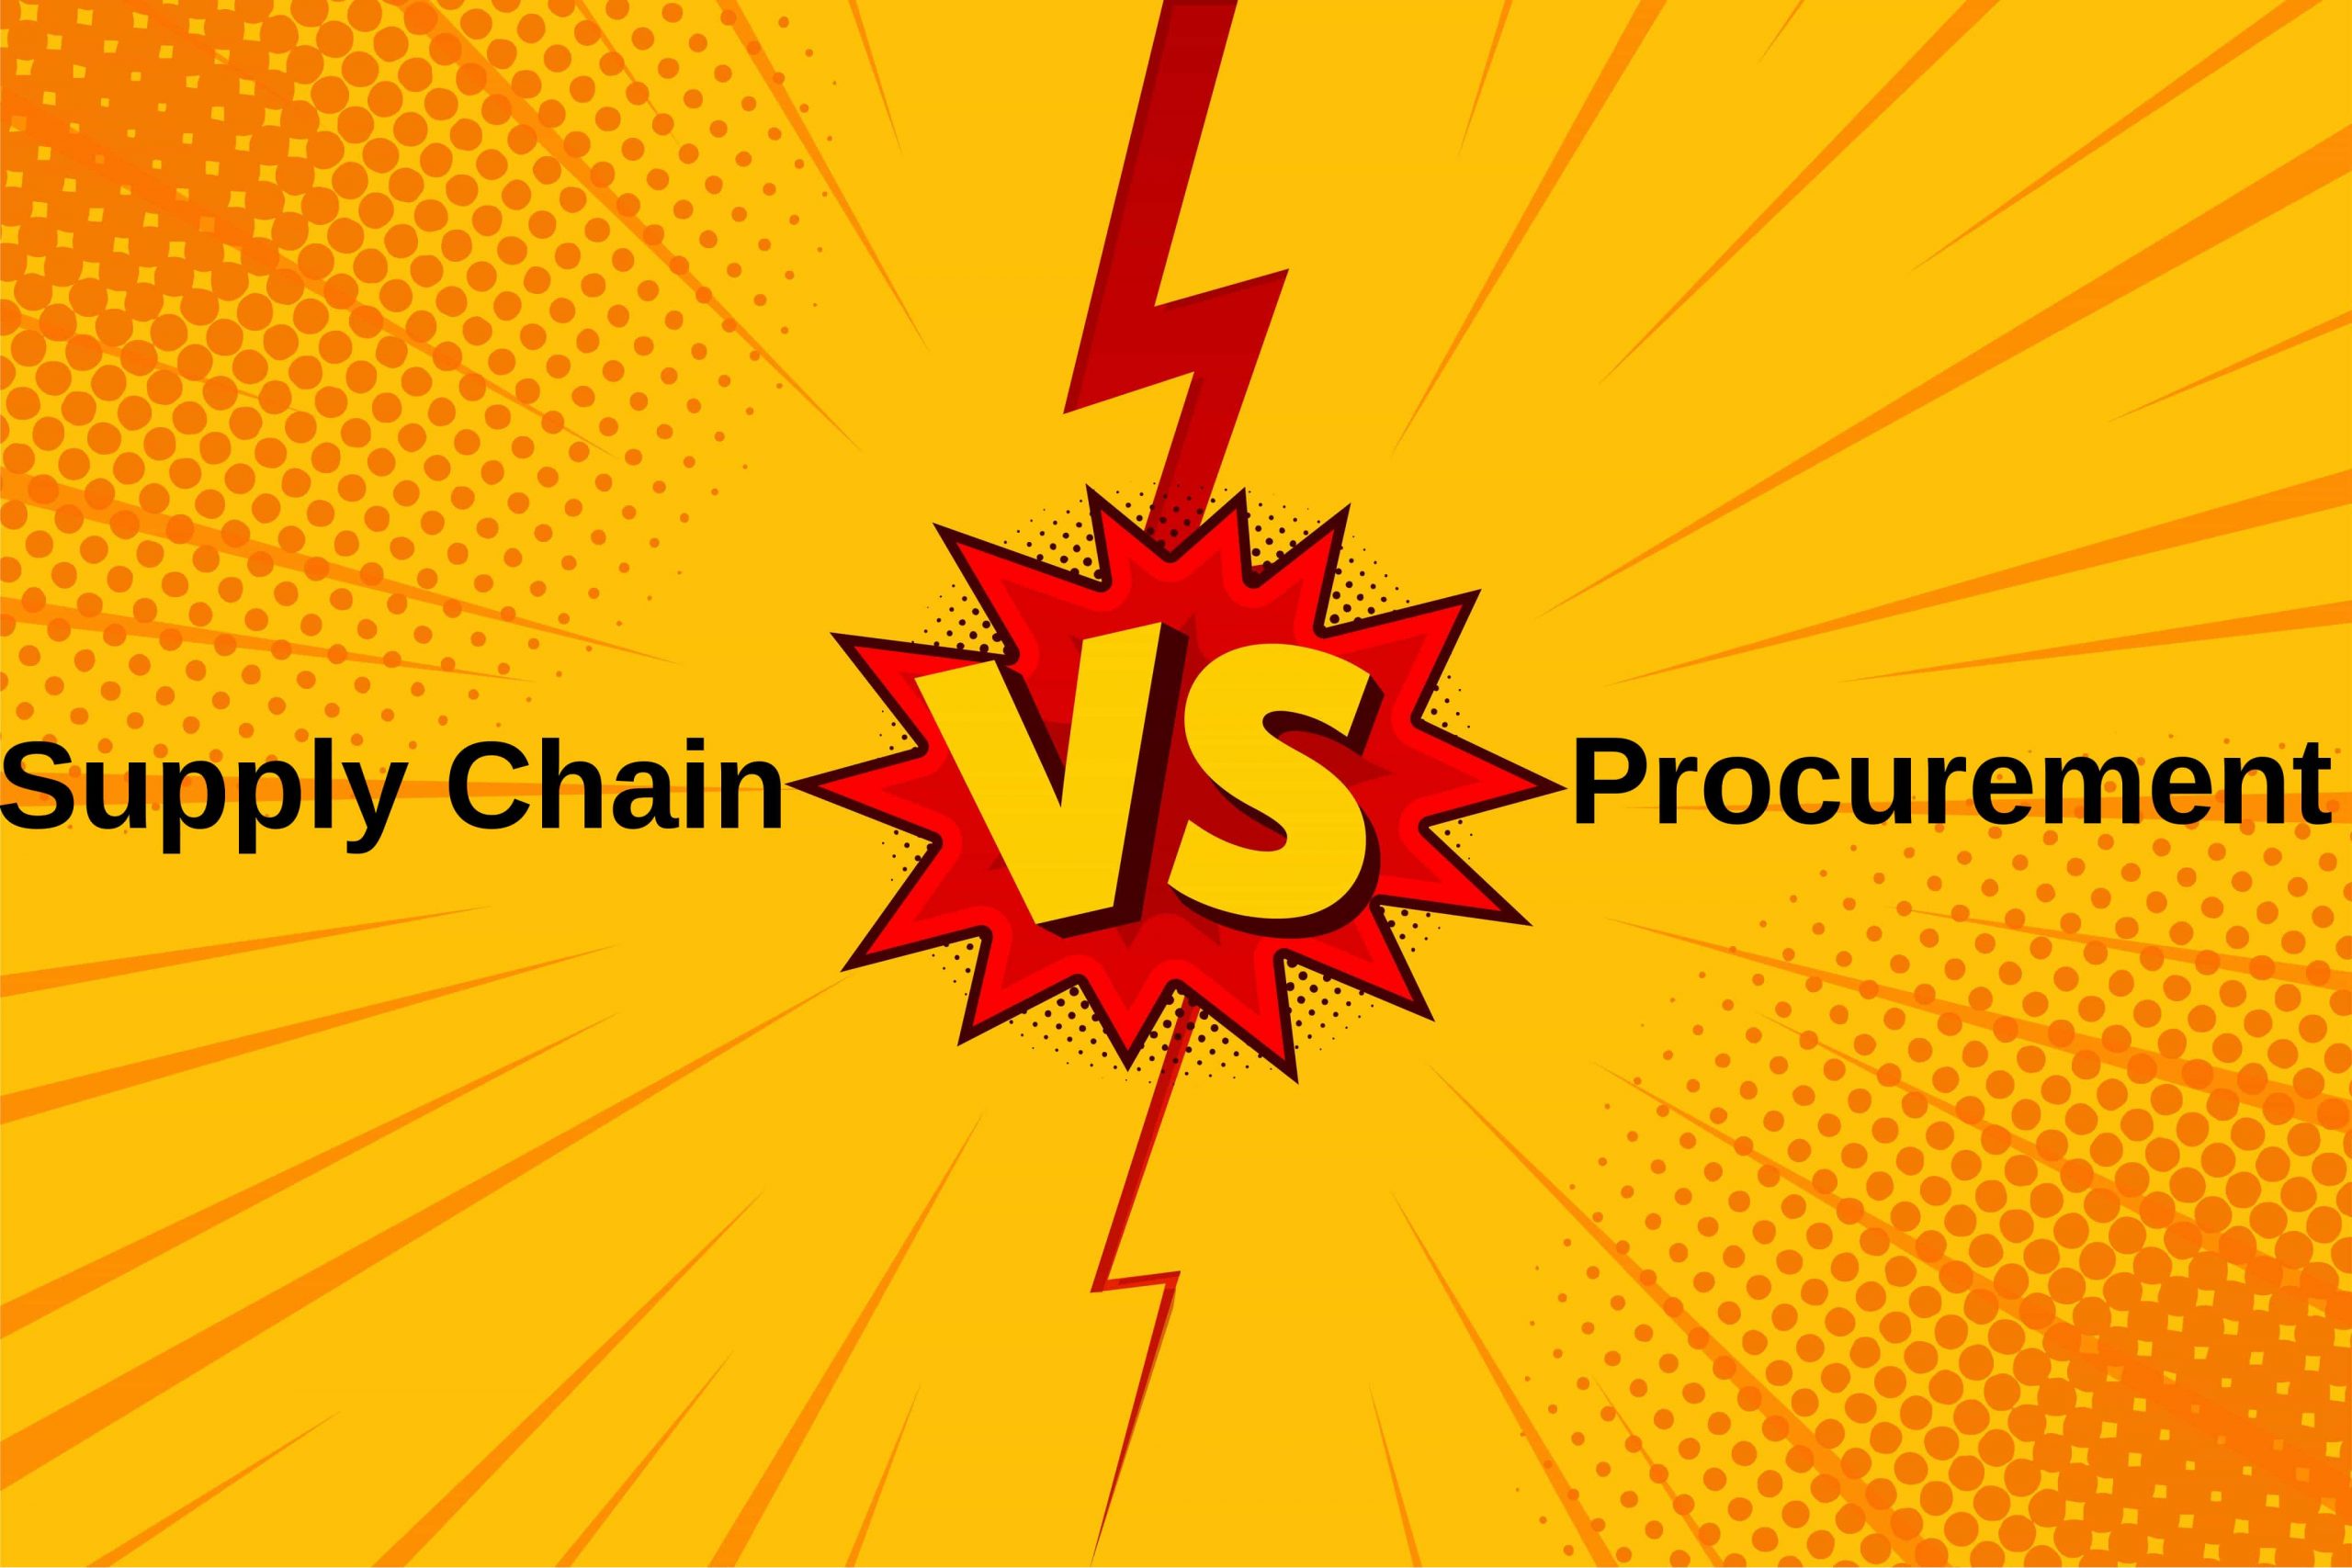 Supply Chain vs Procurement